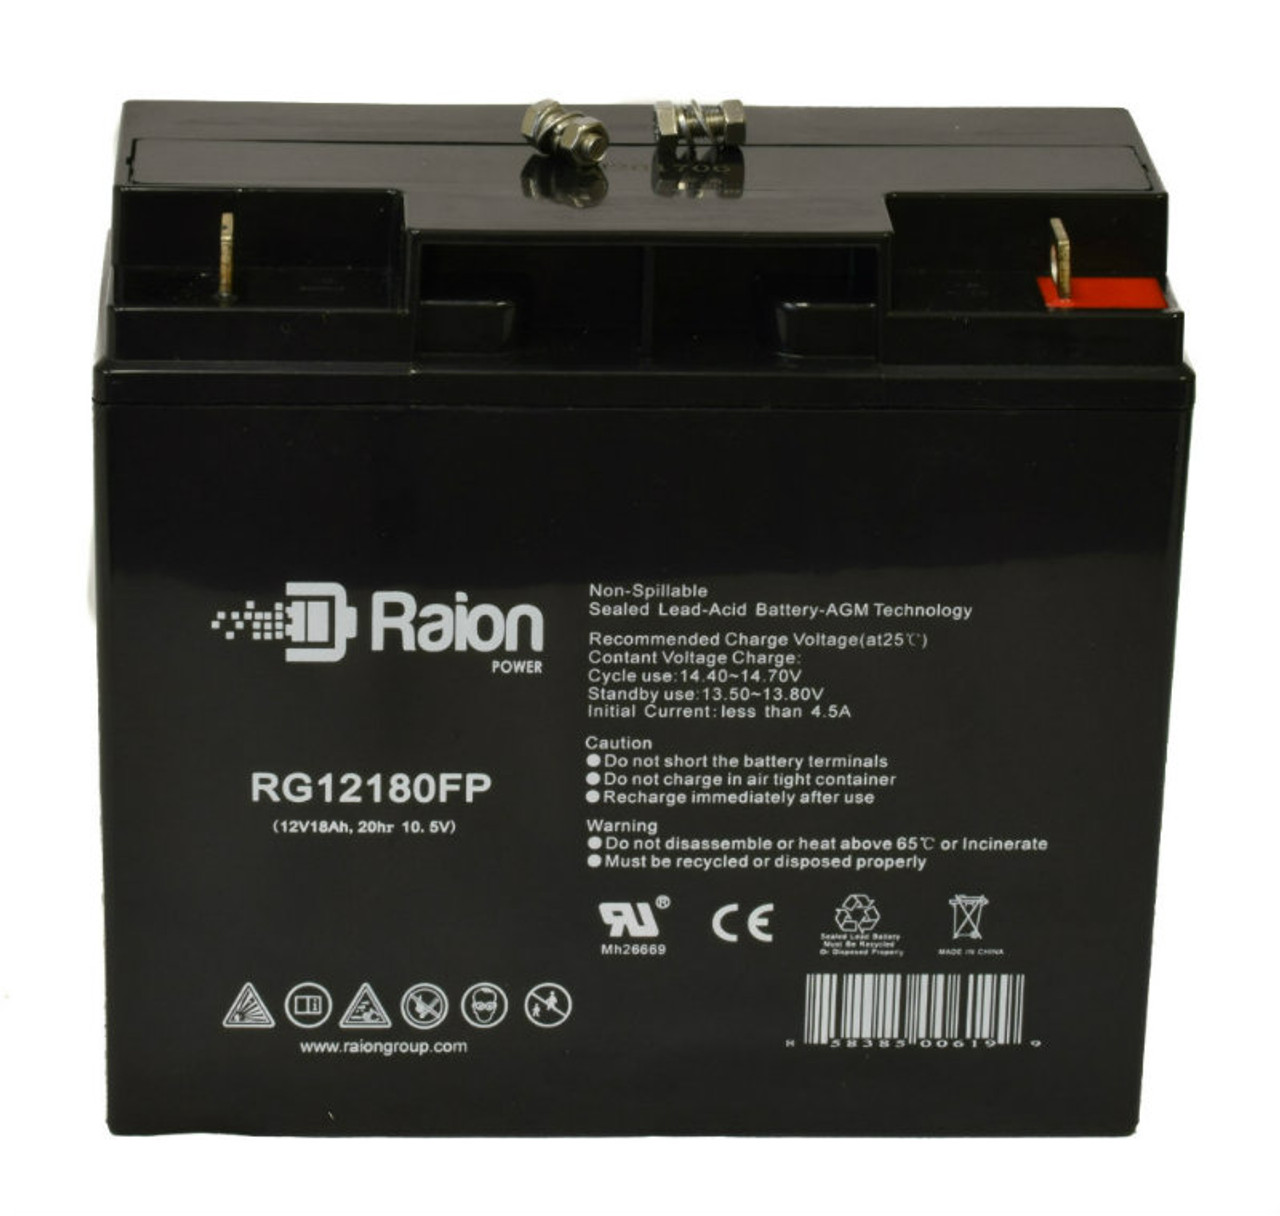 Raion Power RG12180FP 12V 18Ah Lead Acid Battery for Xantrex Technology XPower PowerSource 400